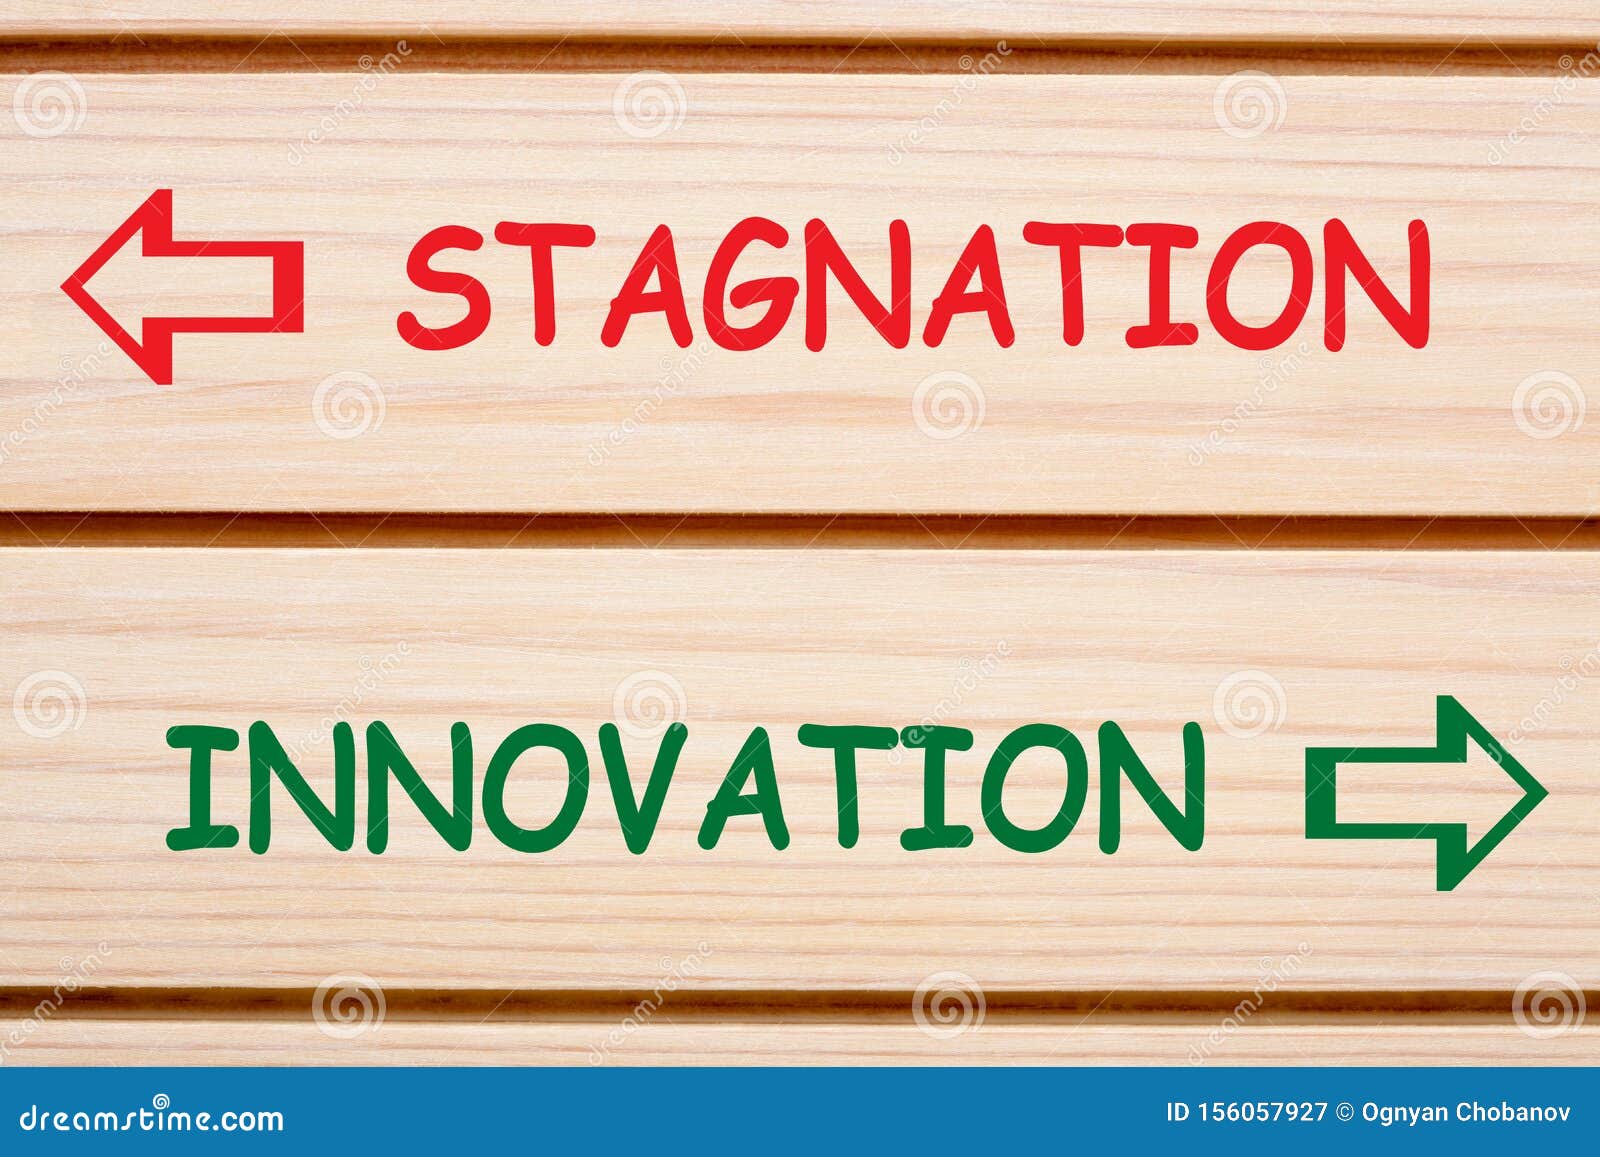 stagnation innovation opposite words